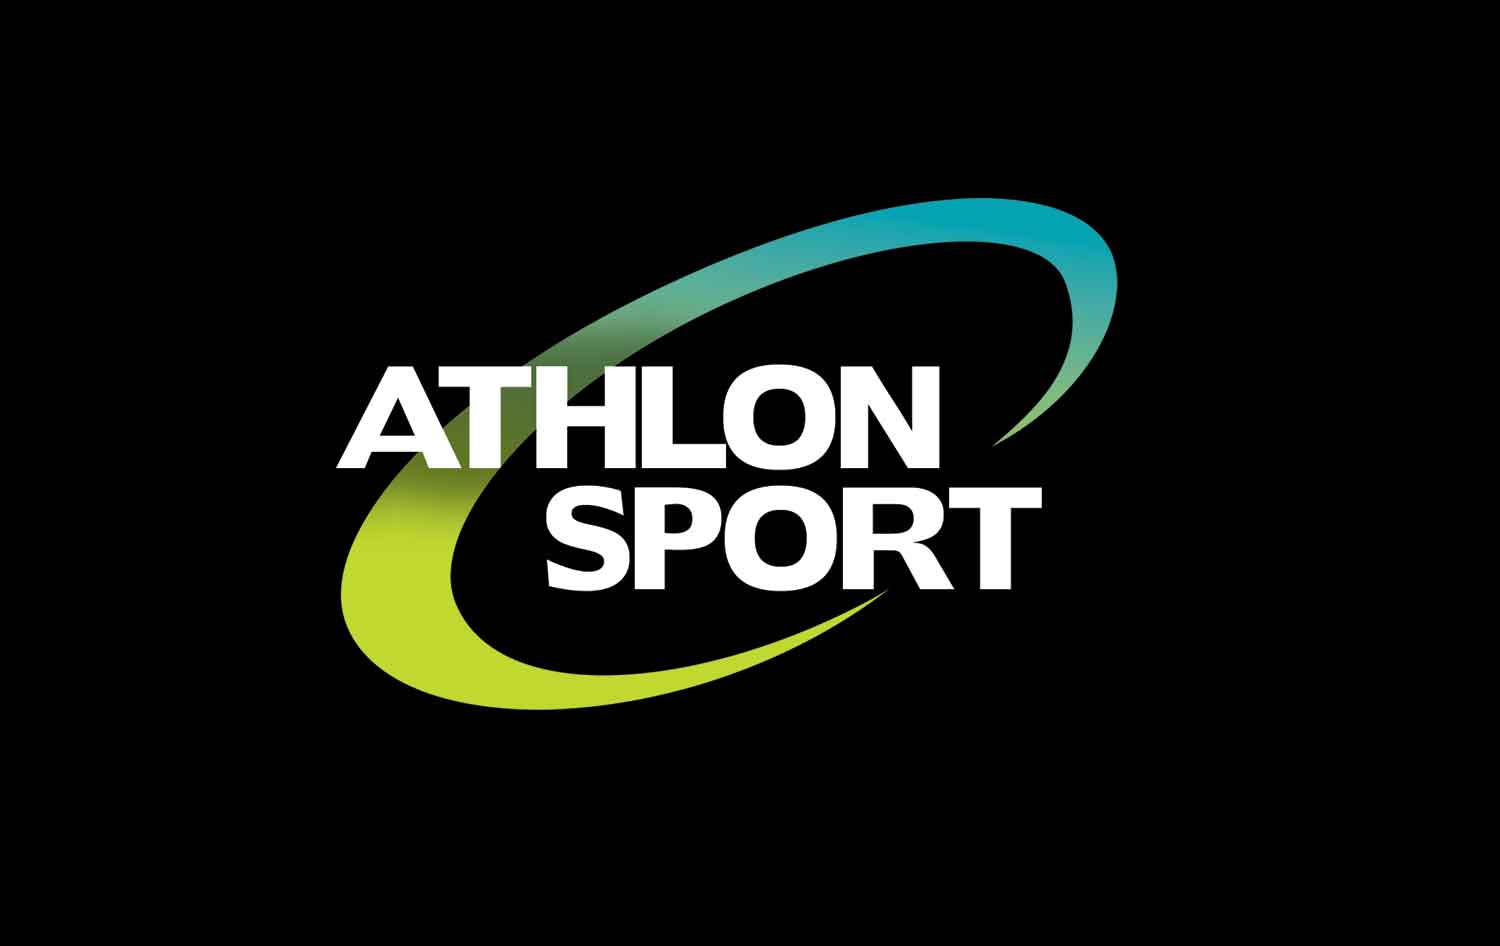 Athlon Sport logo design